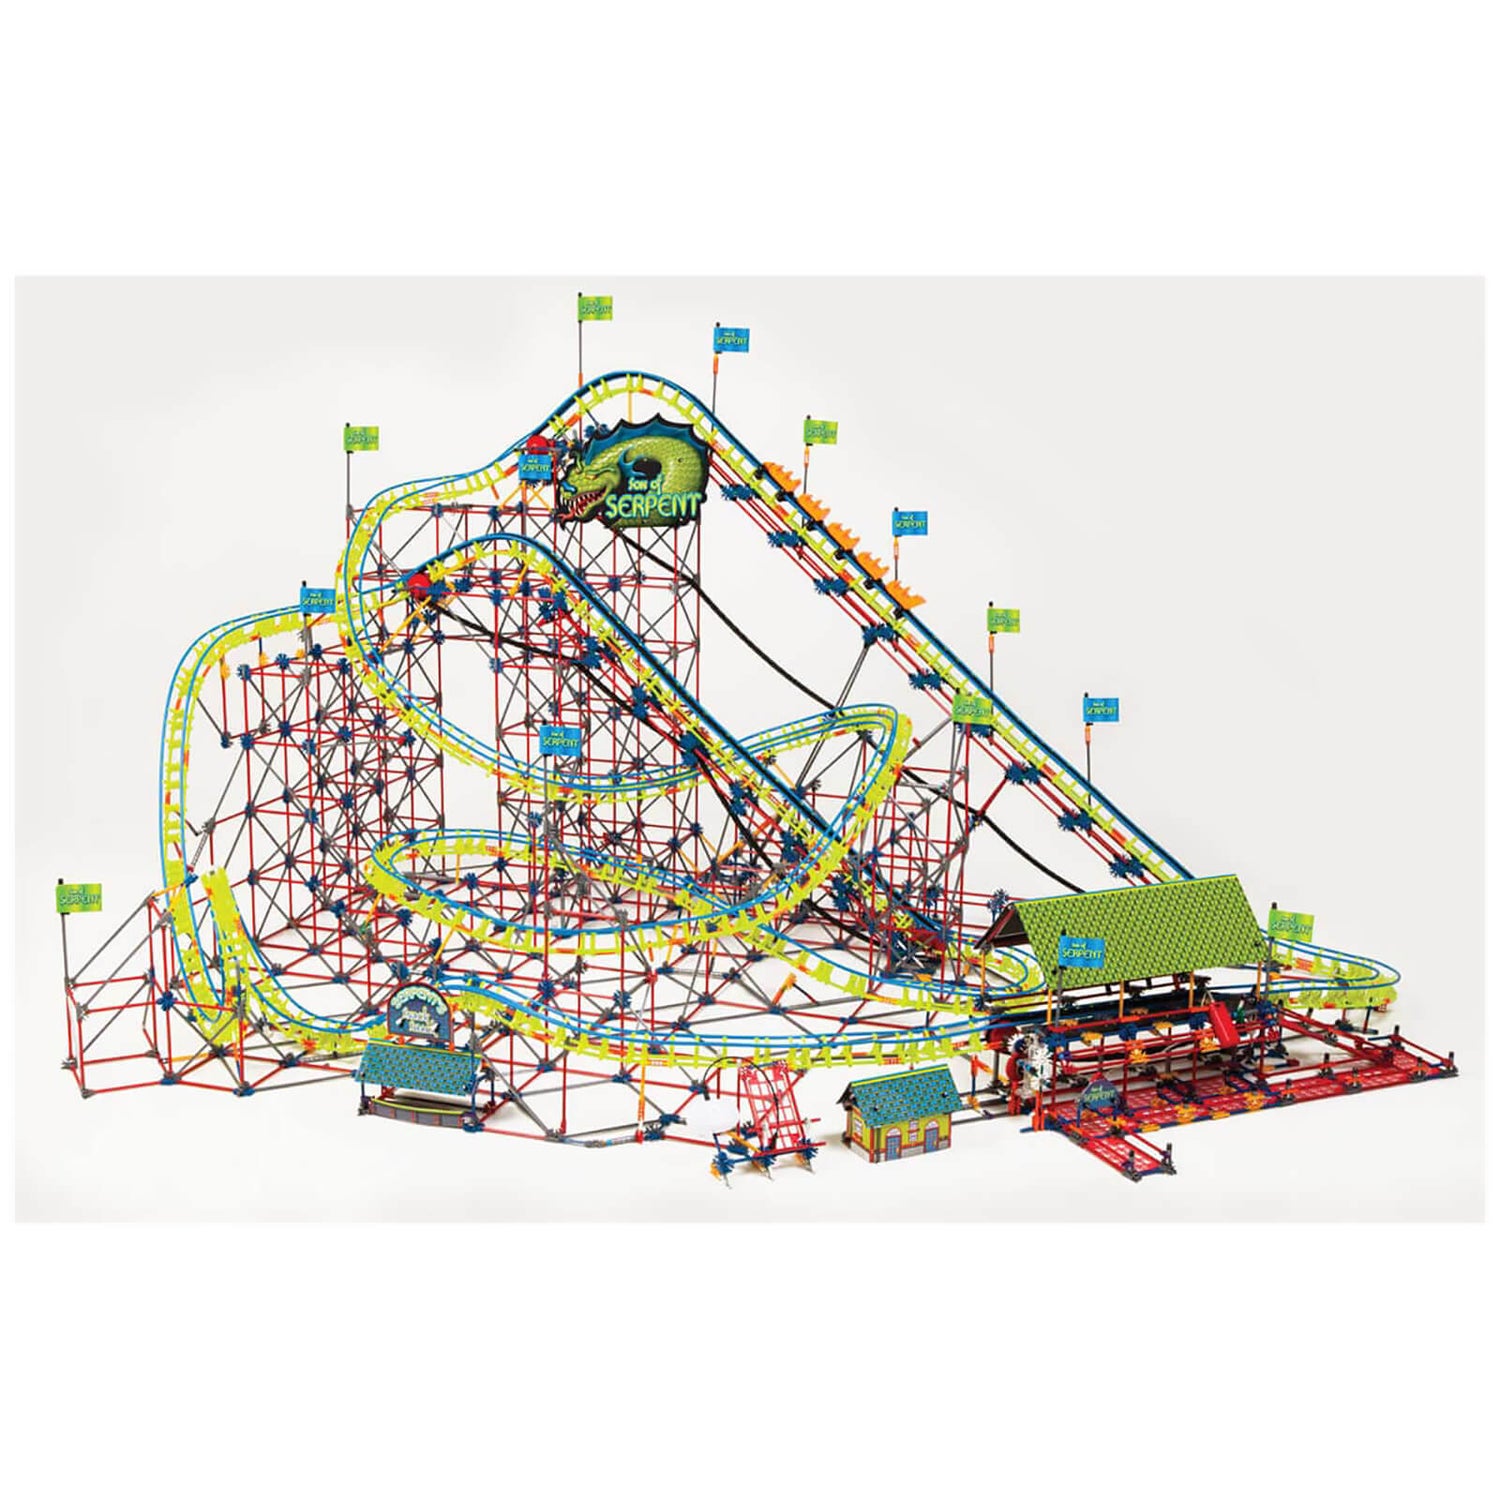 K'NEX Son of Serpent Roller Coaster (52242) Toys